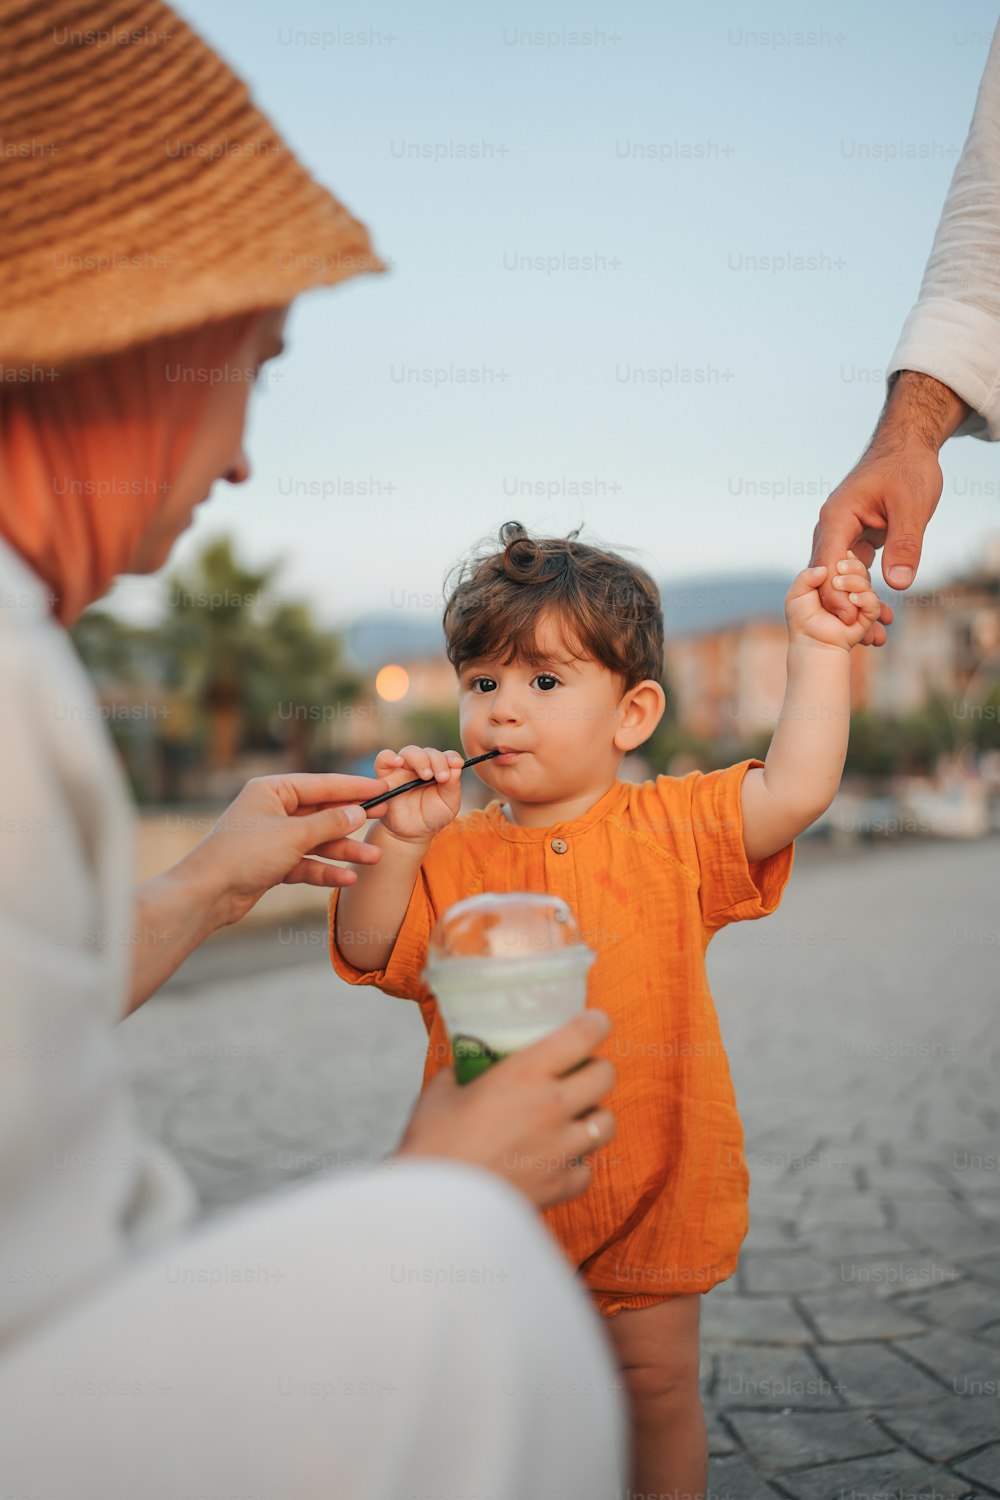 a woman feeding a child a spoon of food